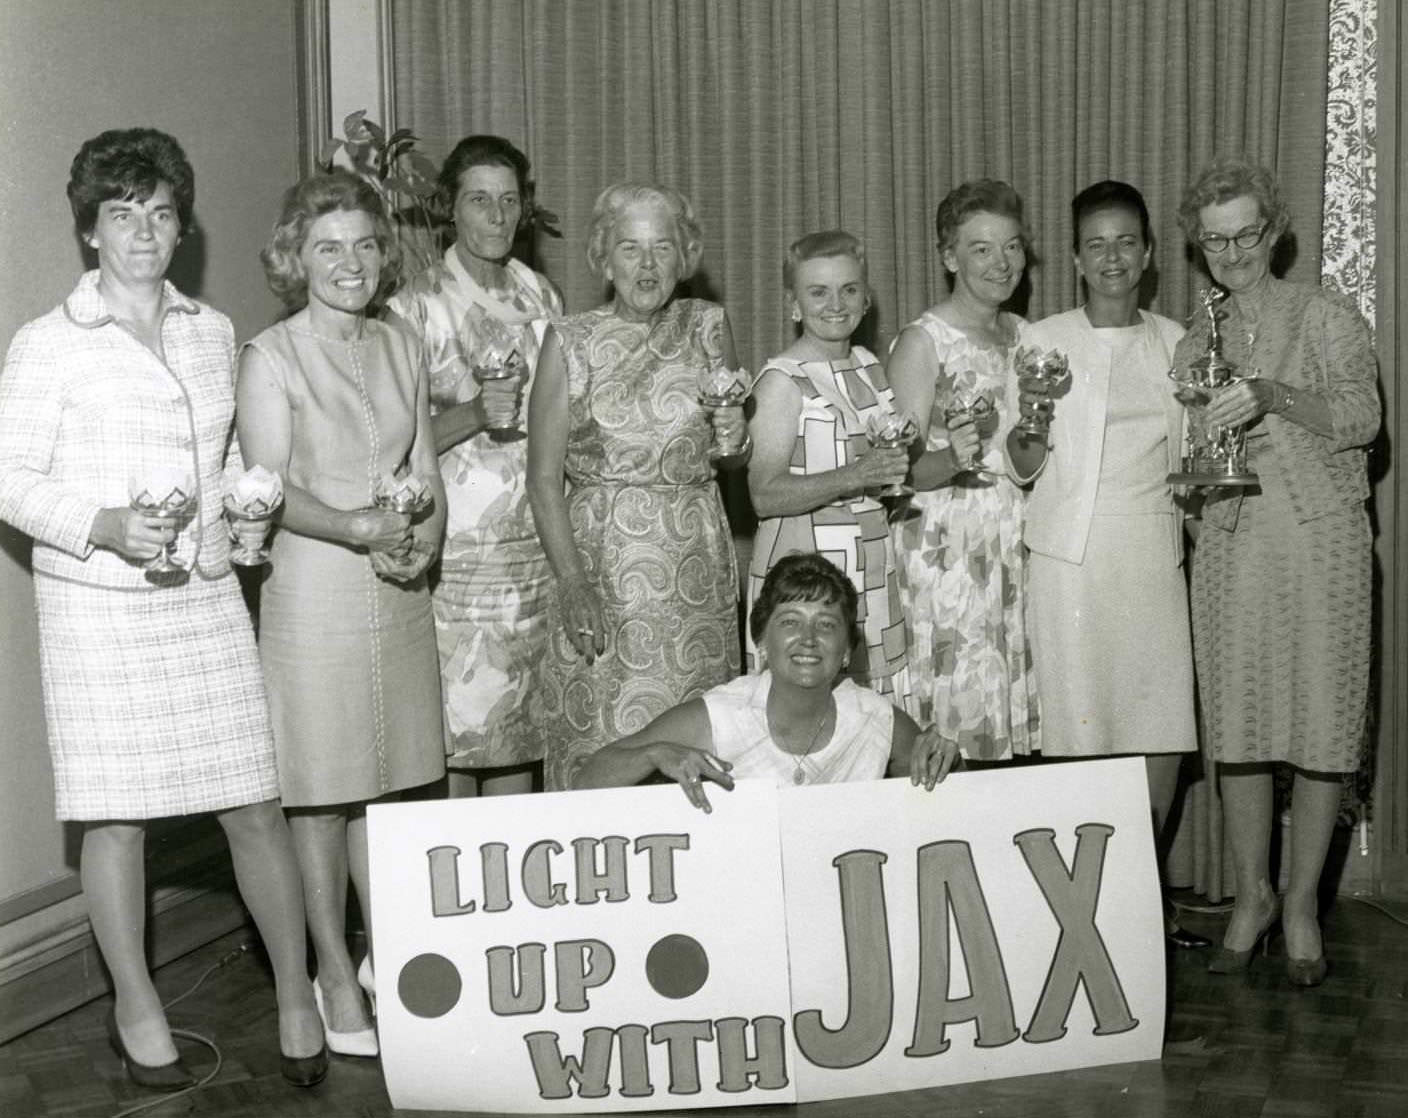 Group portrait of ladies from the Austin Women's Public Links Golf Association, 1960s